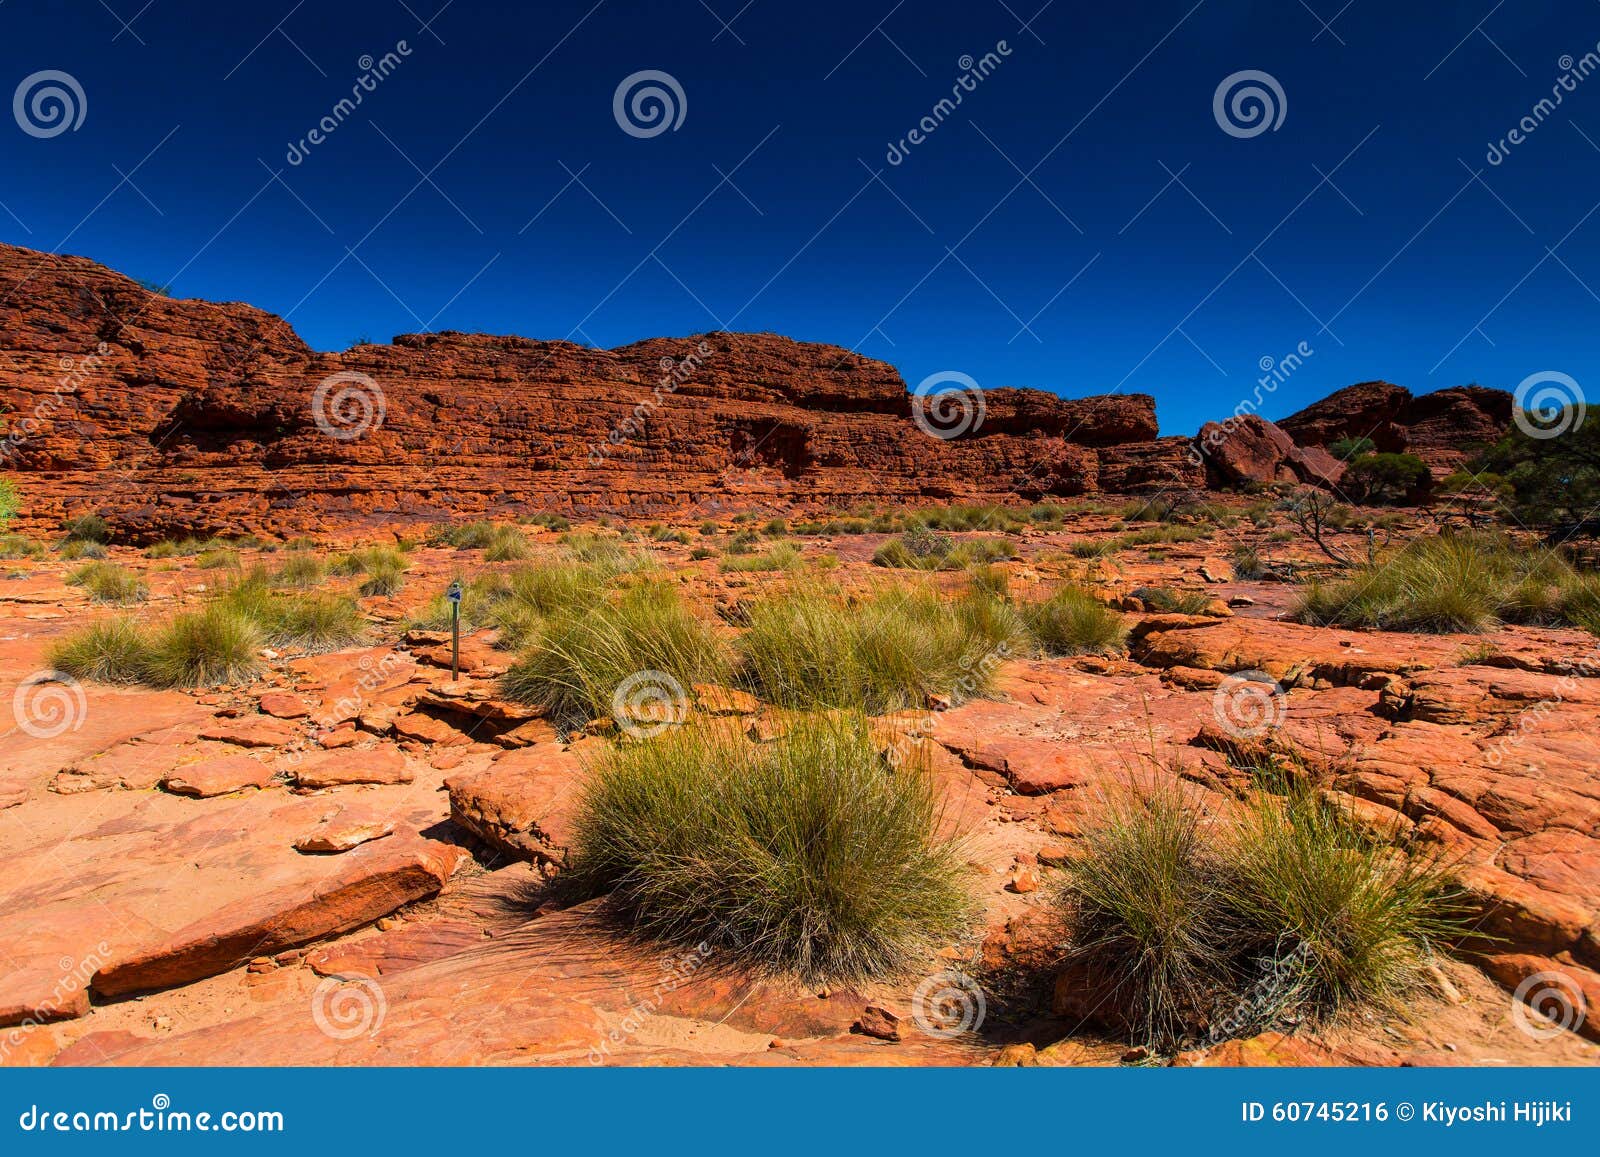 australia outback landscape view